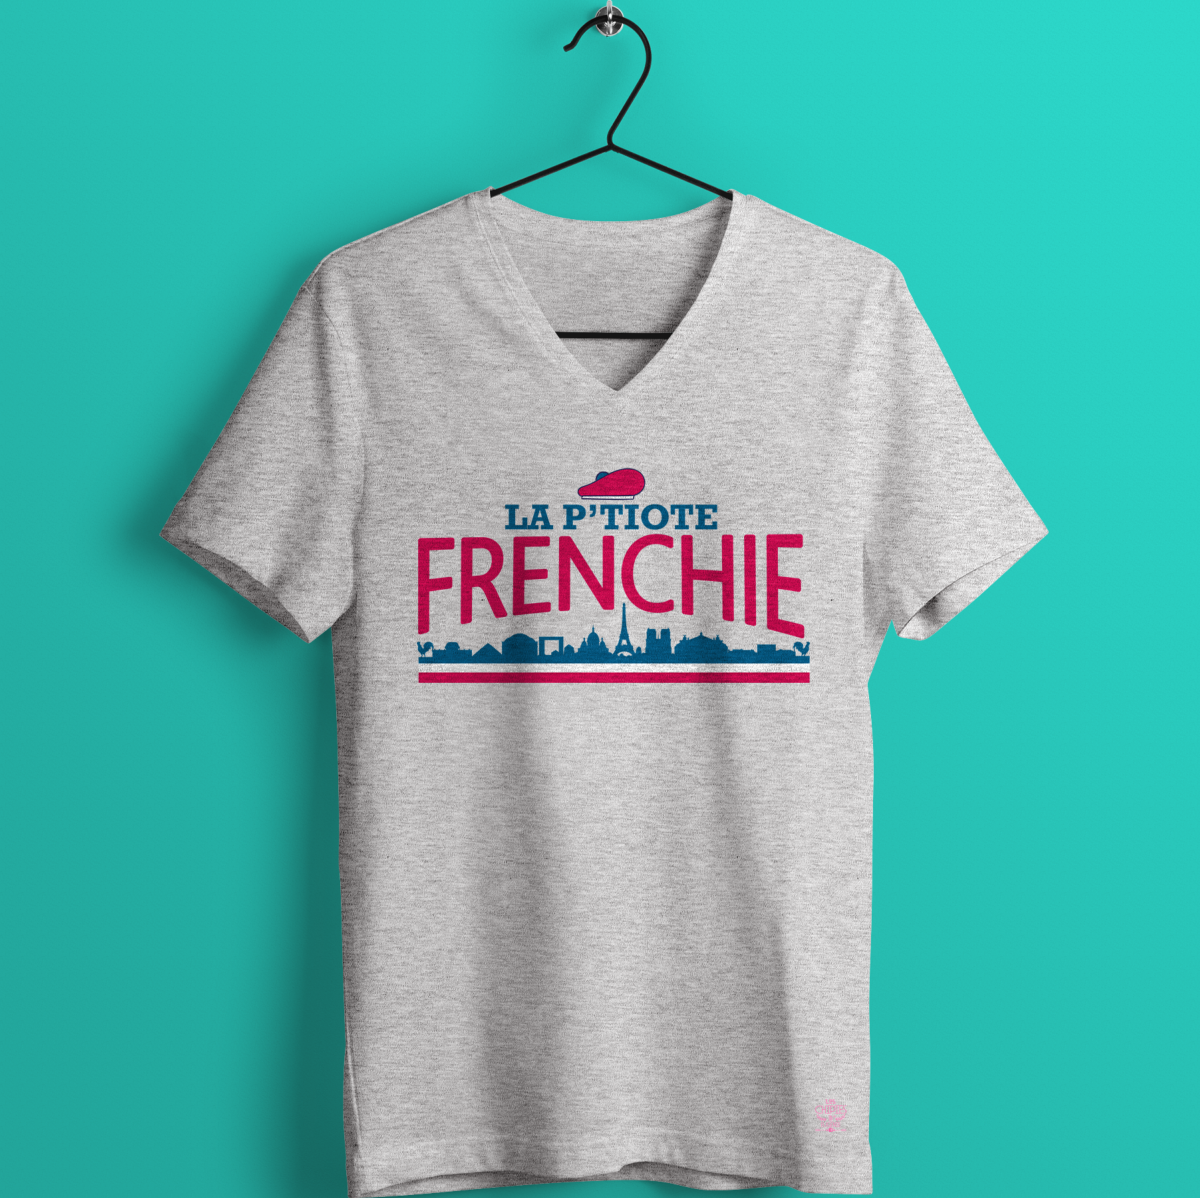 TEE-SHIRT " LA P'TIOTE FRENCHIE"